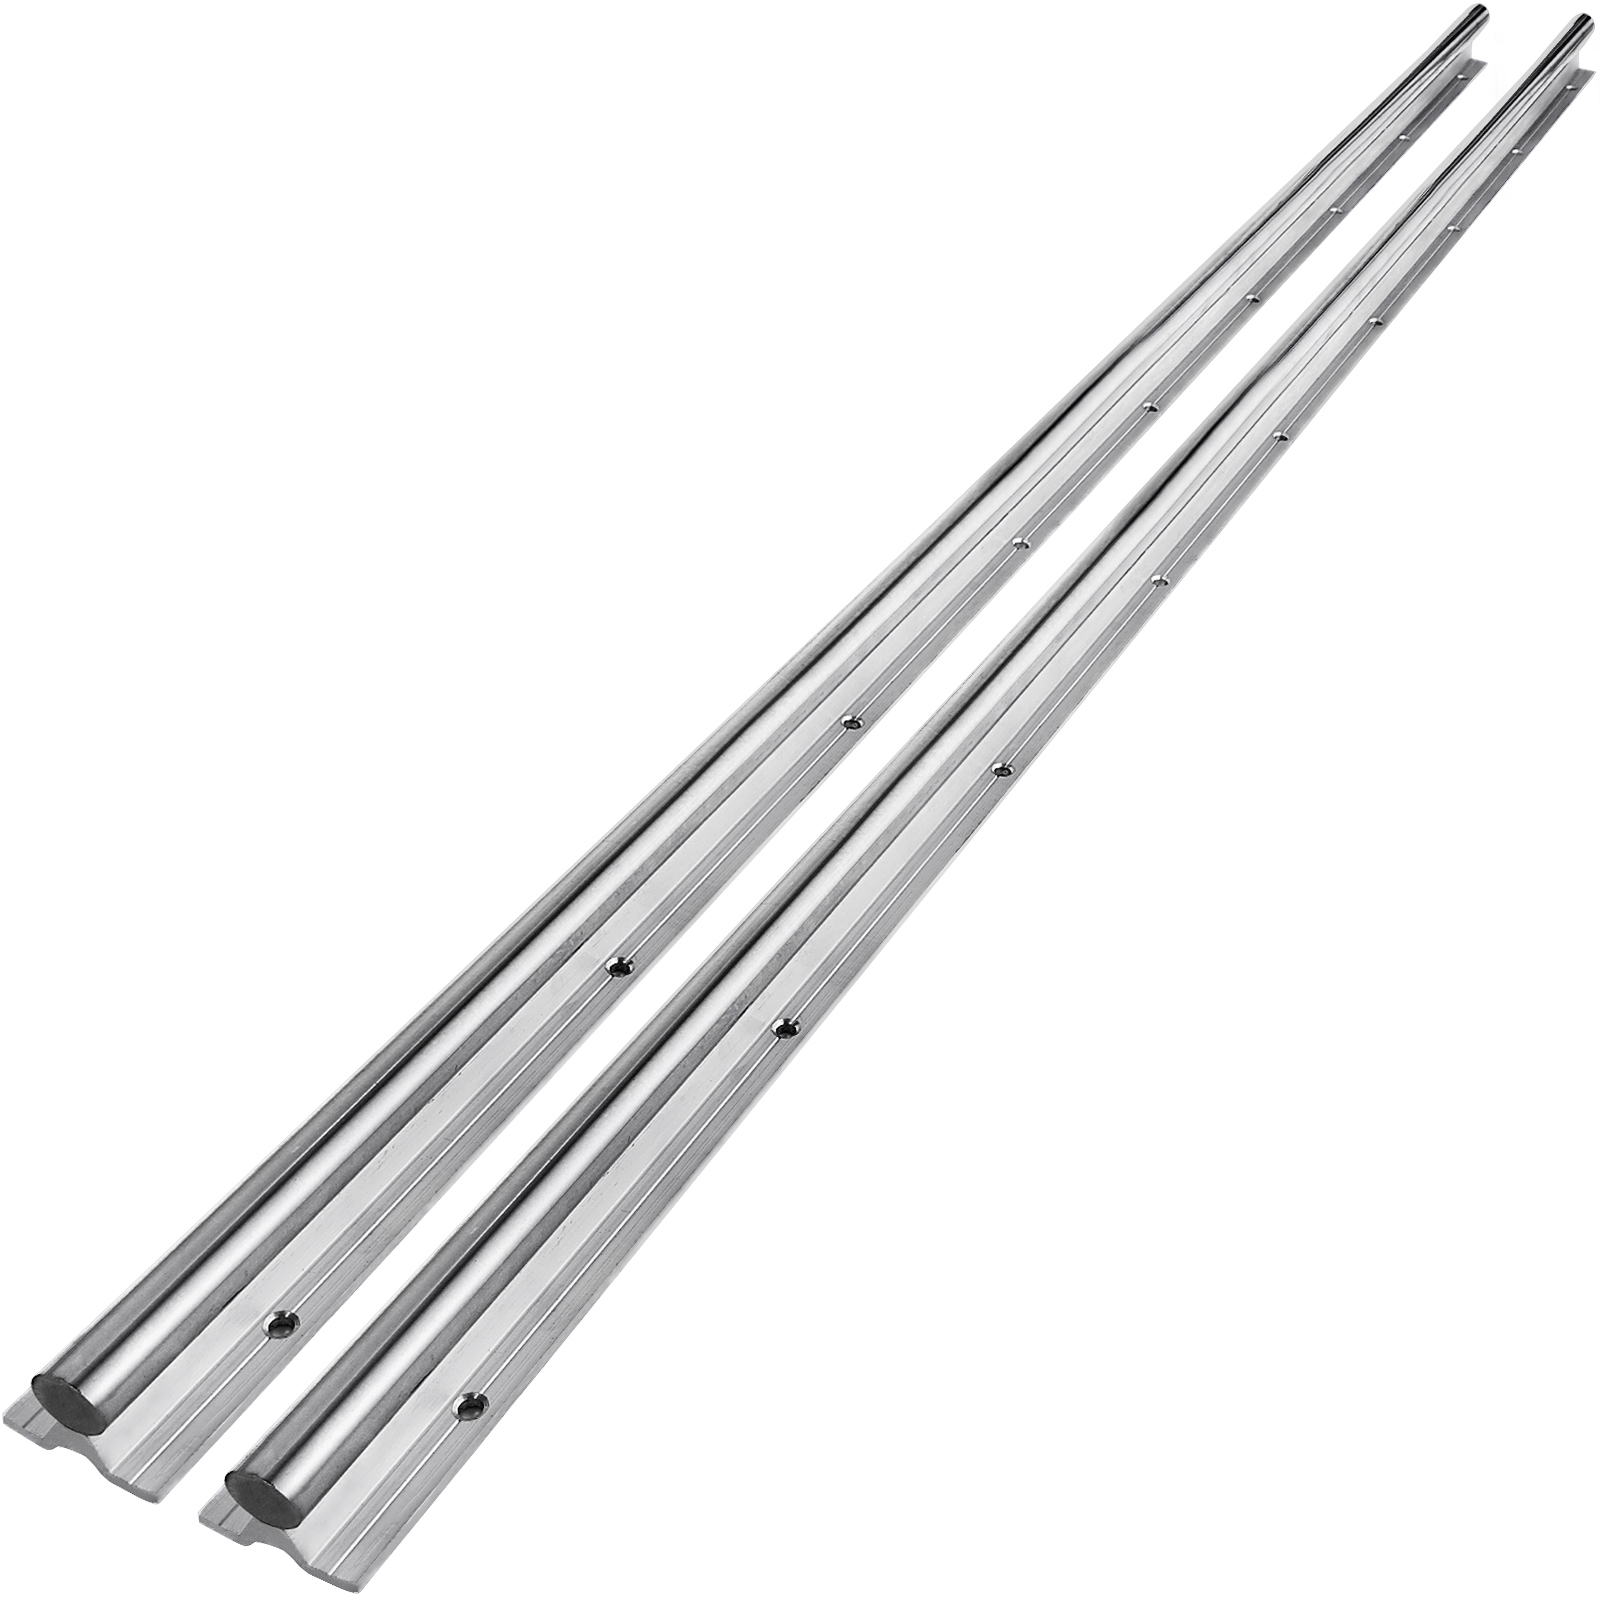 20mm x 1000mm Linearführung Linearwelle mit Aluminium Unterbau Für SBR20UU Rail 